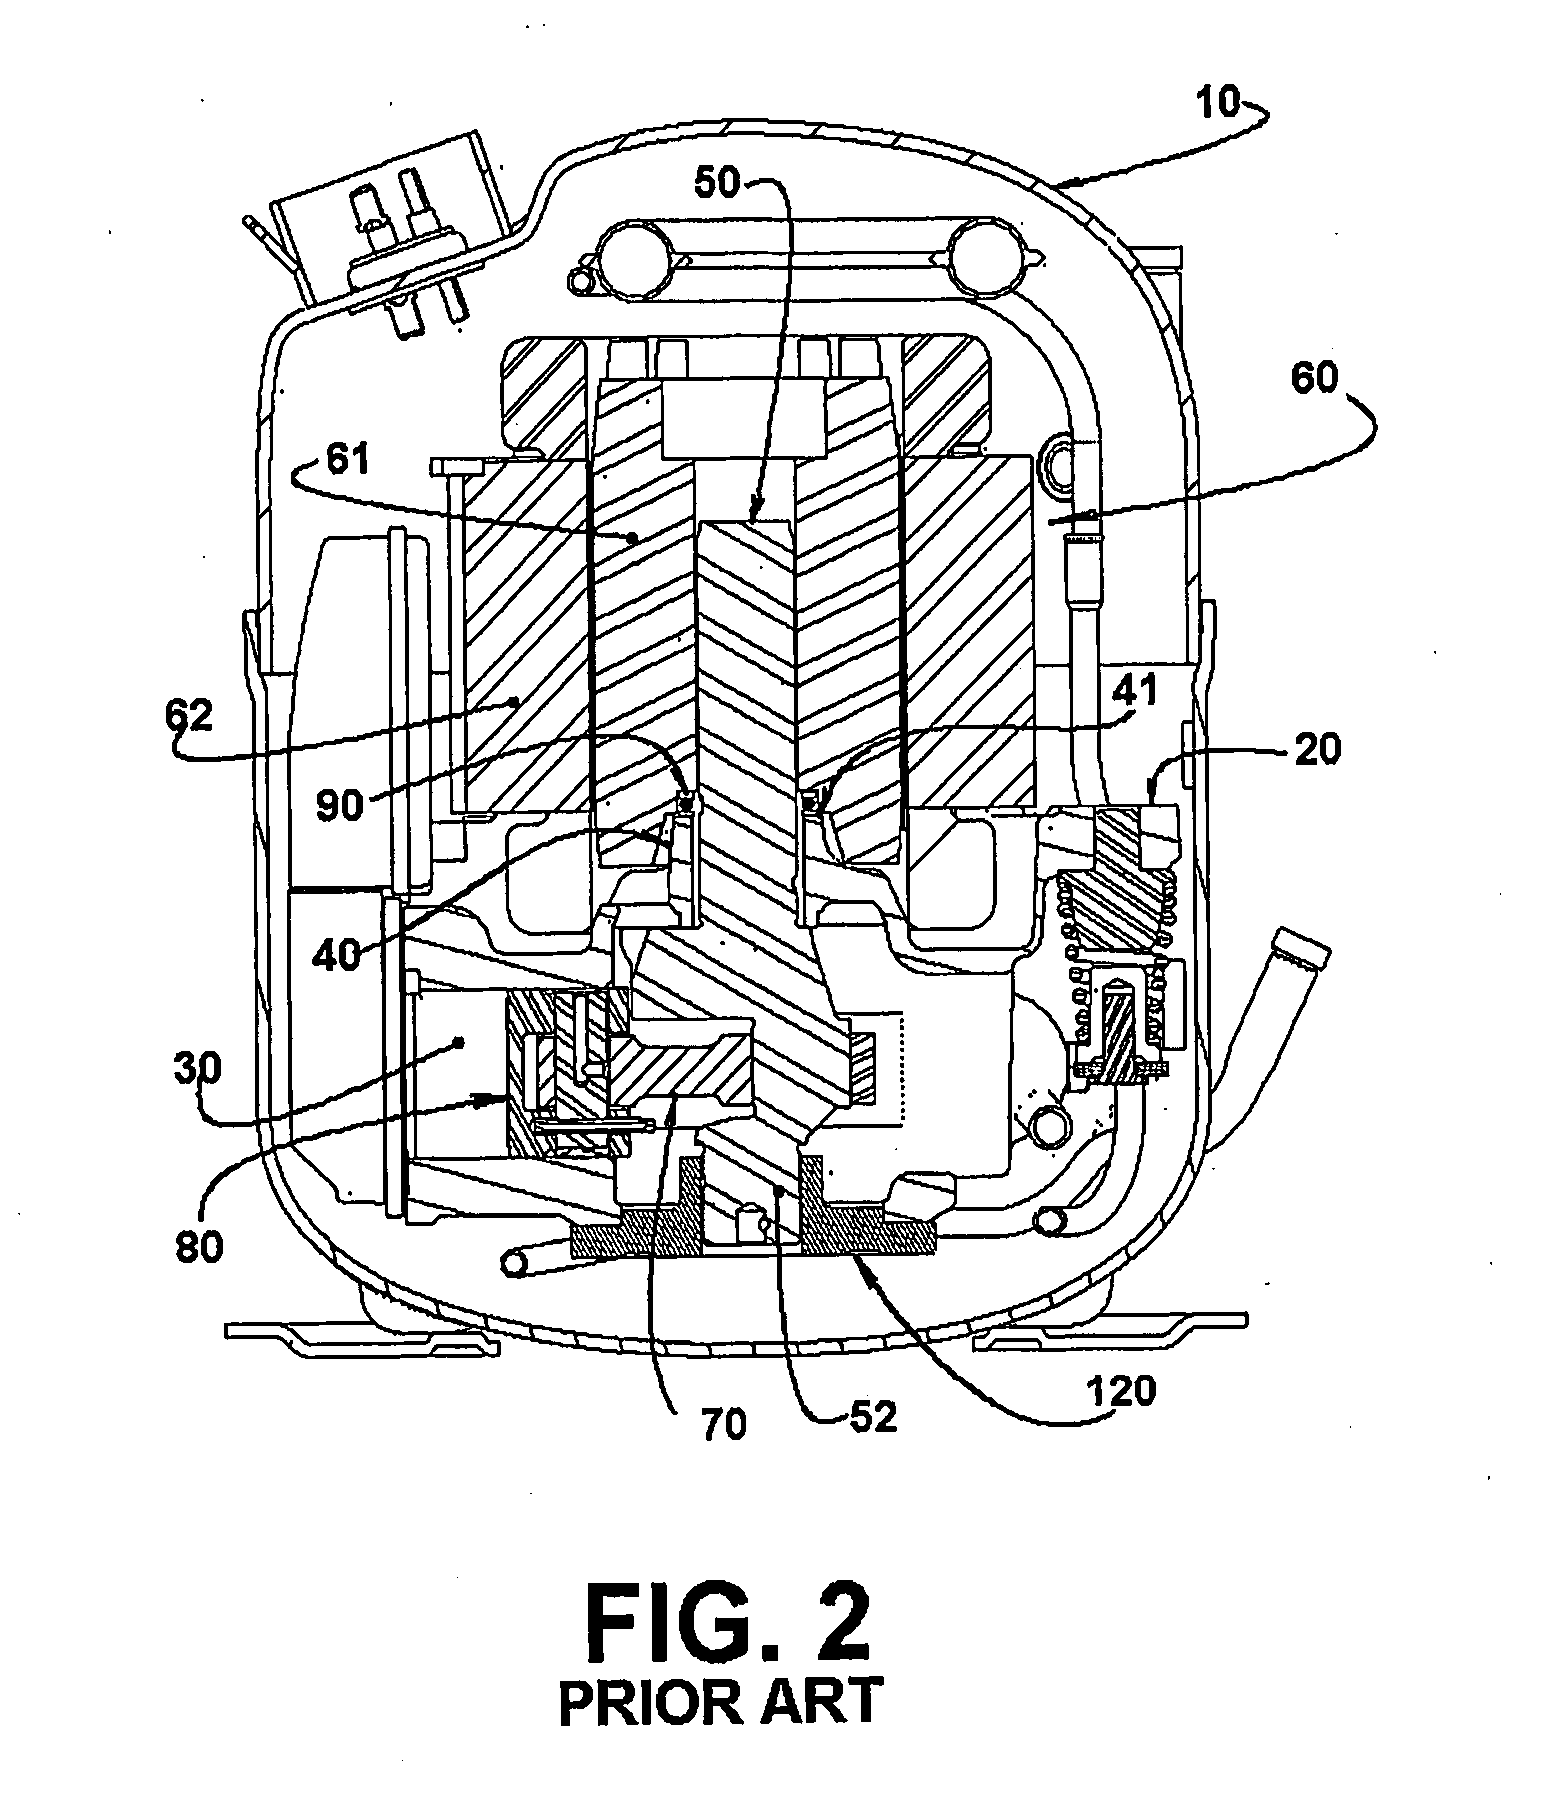 Axial bearing arrangement in a hermetic compressor